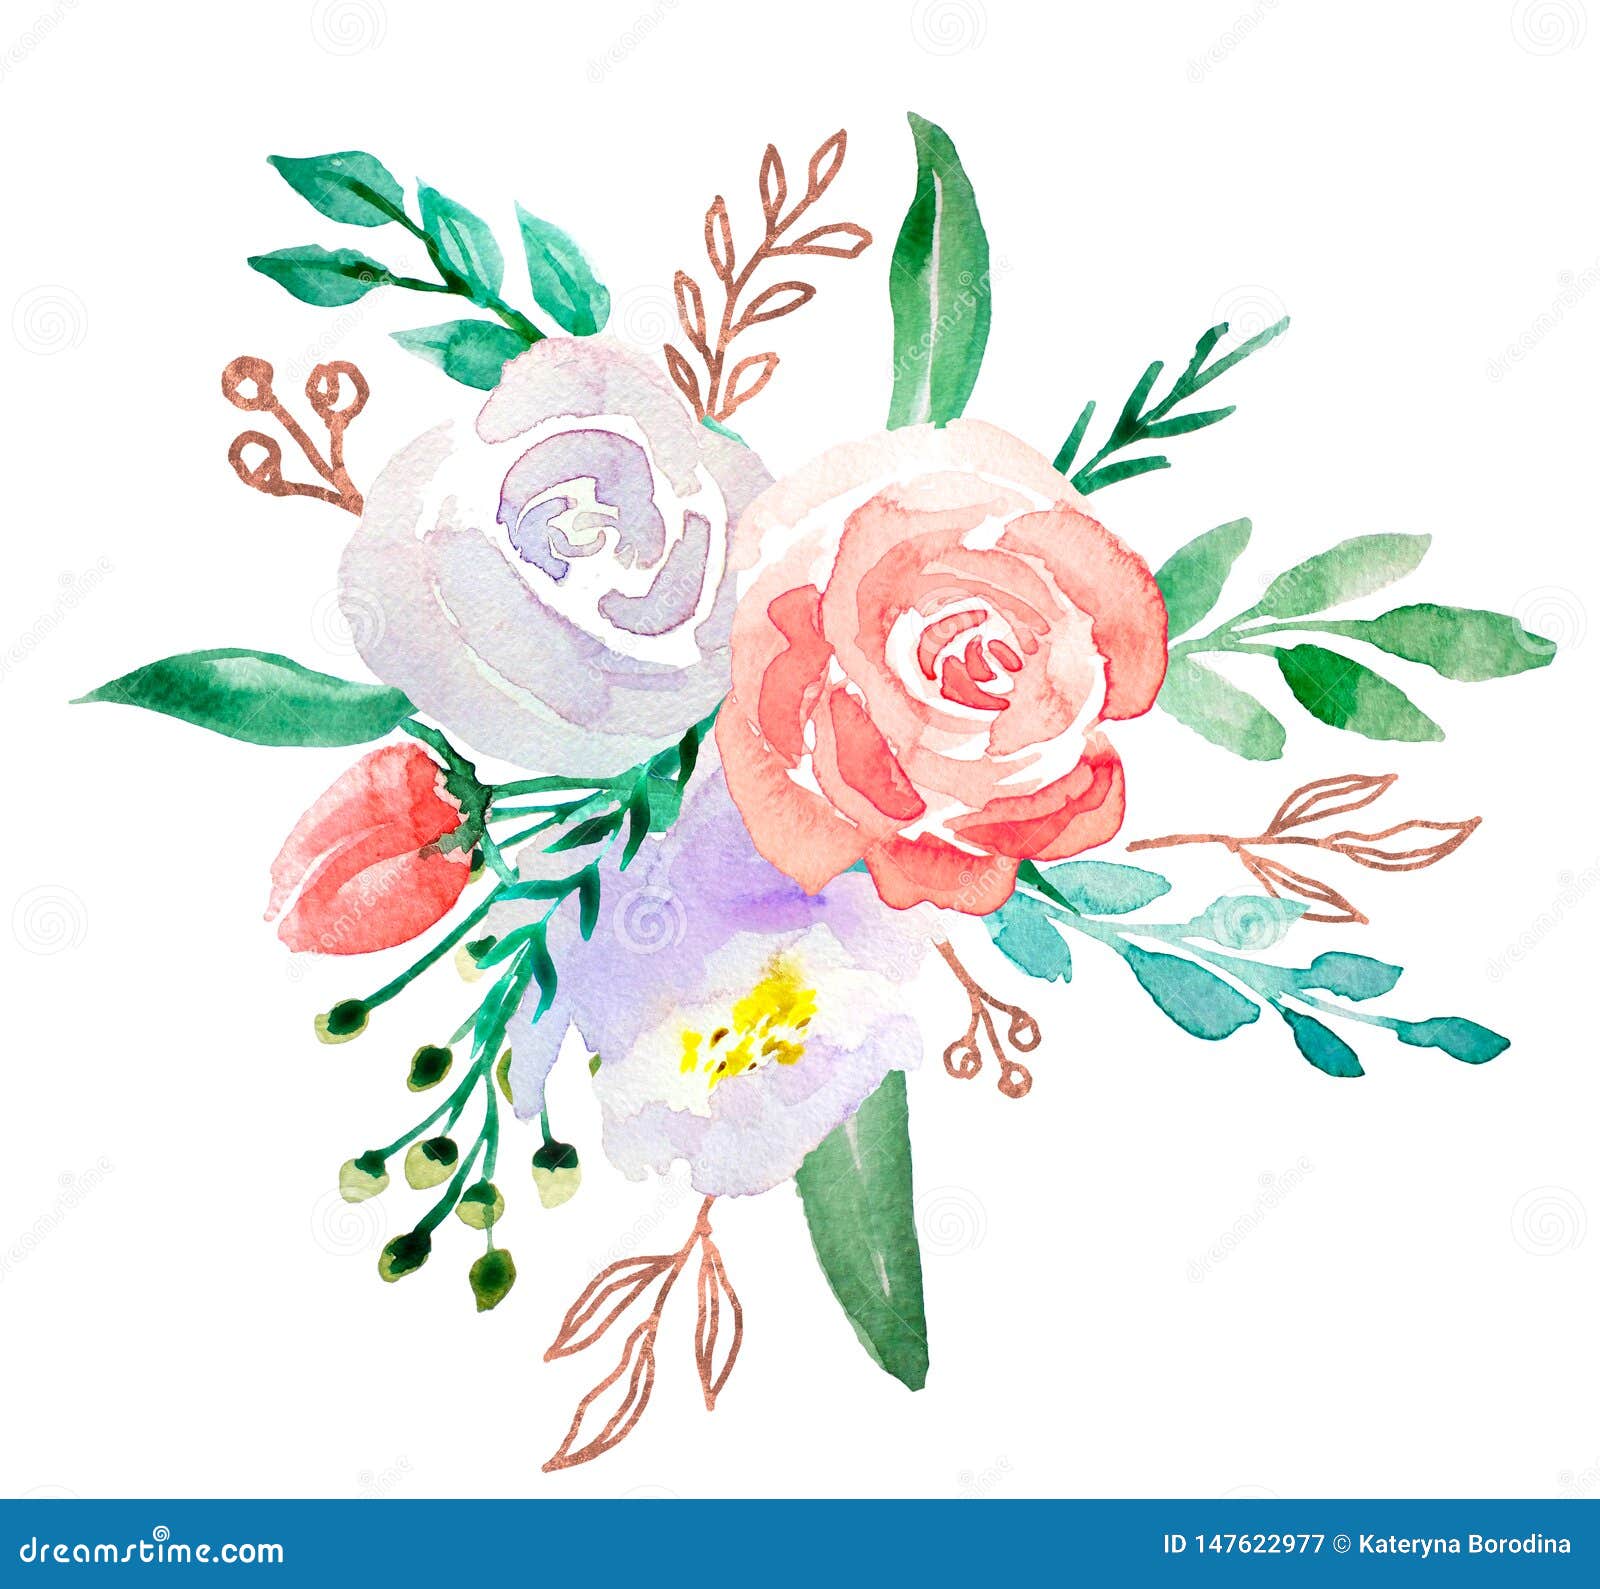 Watercolor Flowers. Floral Illustration, Leaf and Buds. Botanic ...